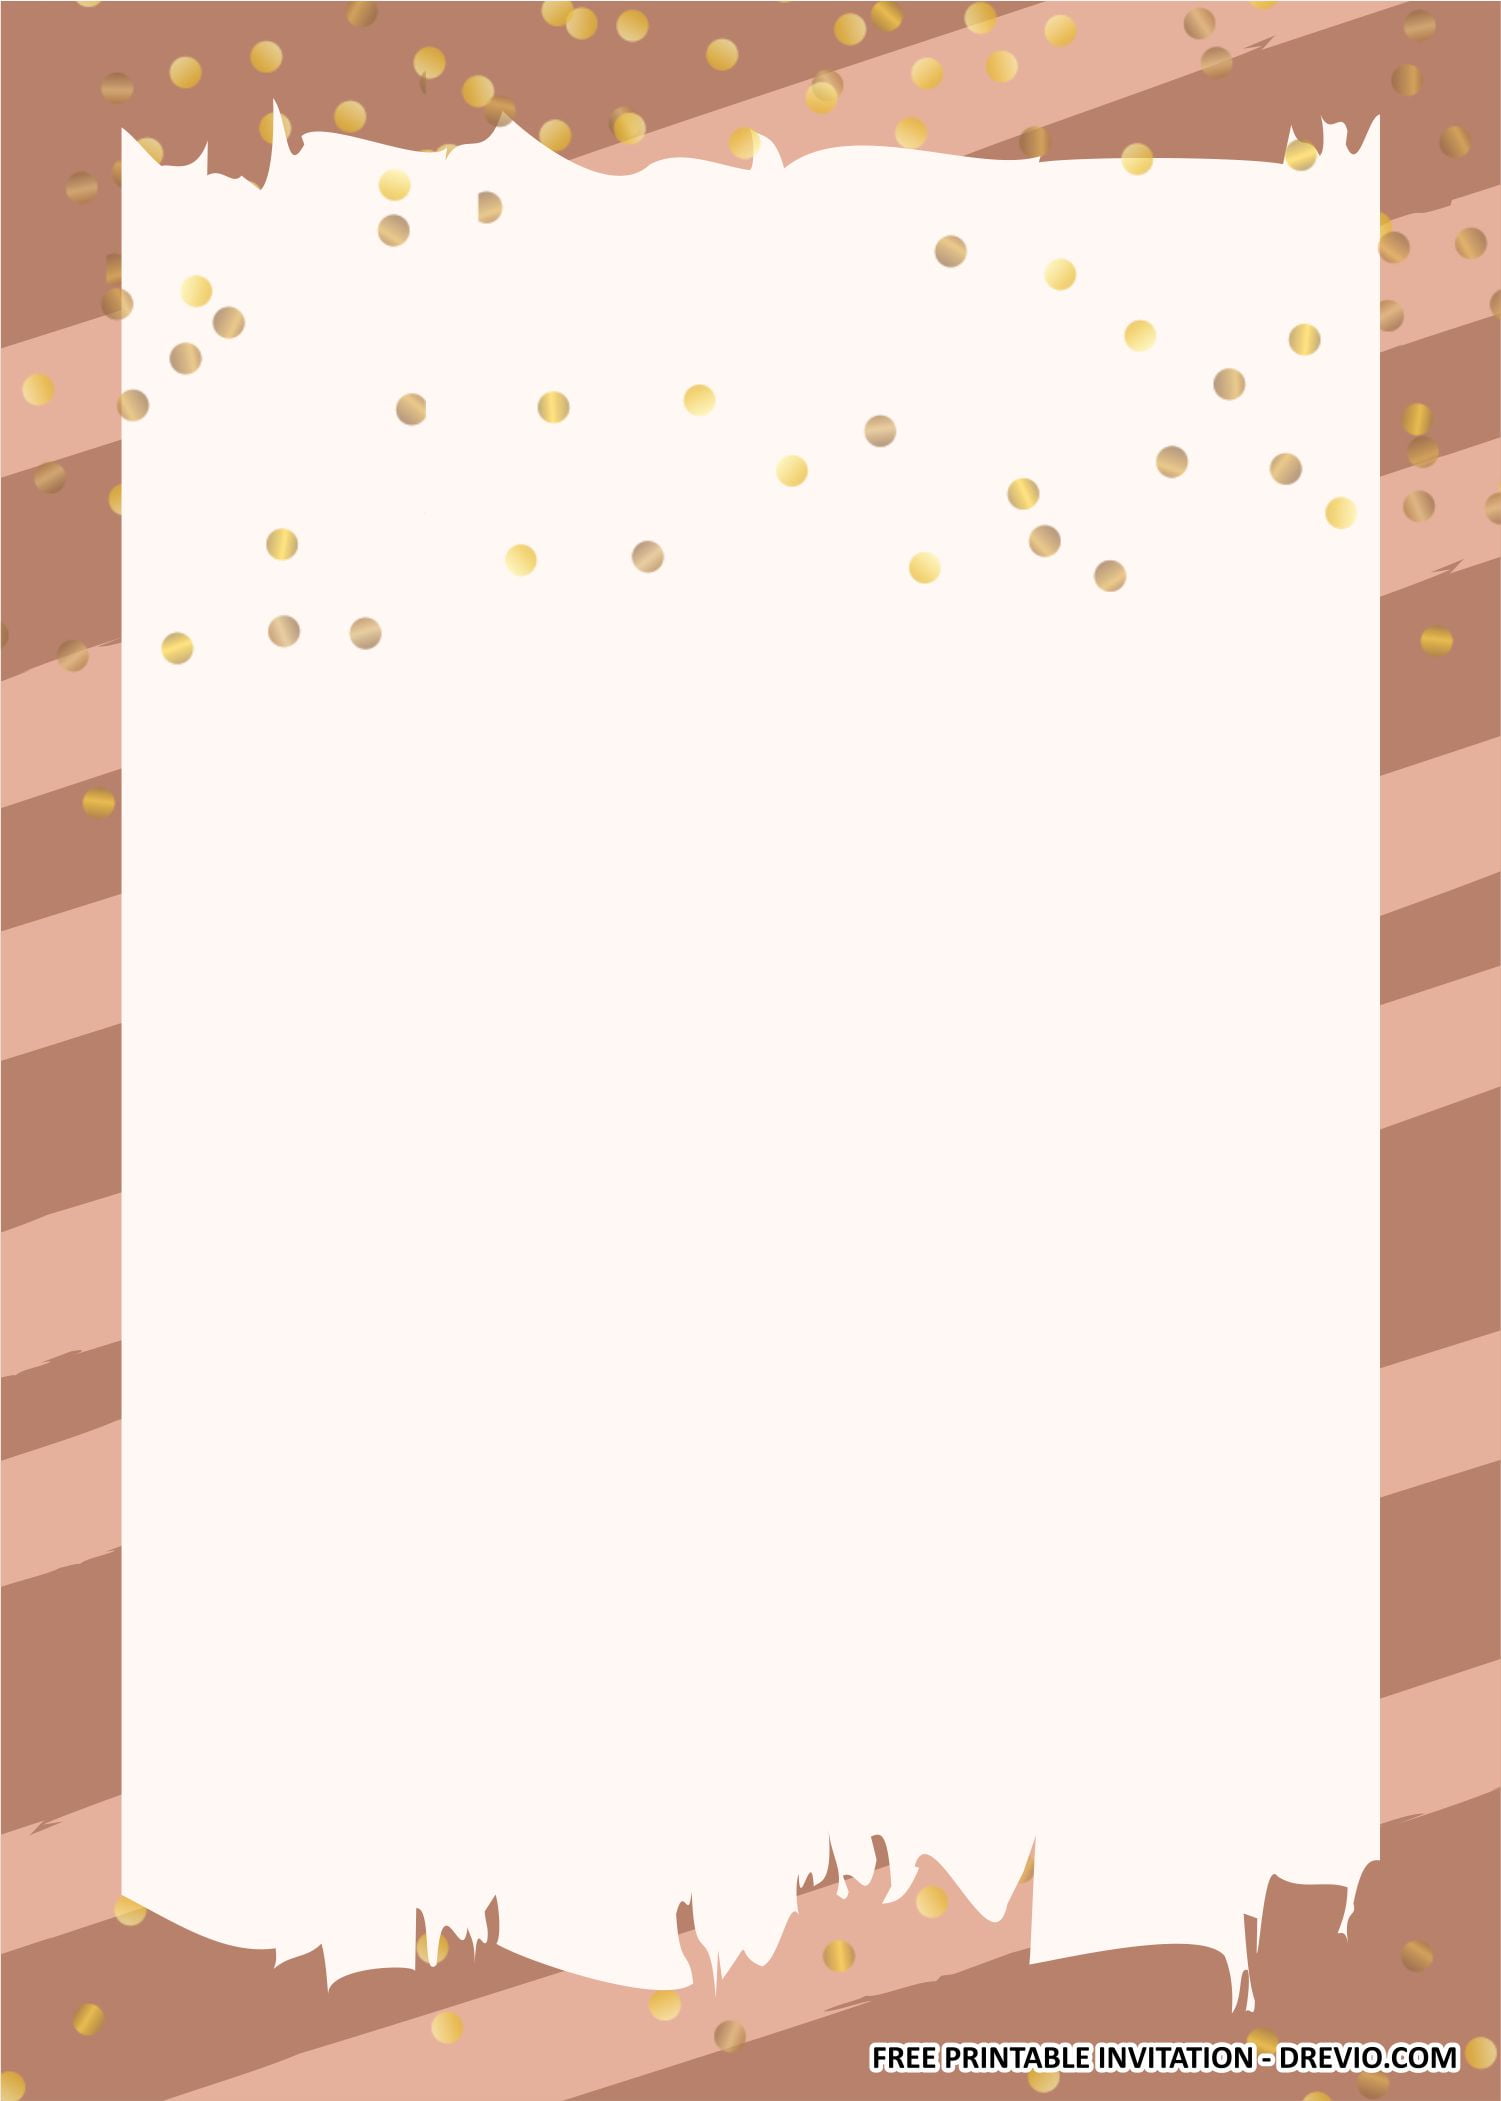 (FREE PRINTABLE) Rose Gold Confetti Birthday Party Kits Templates